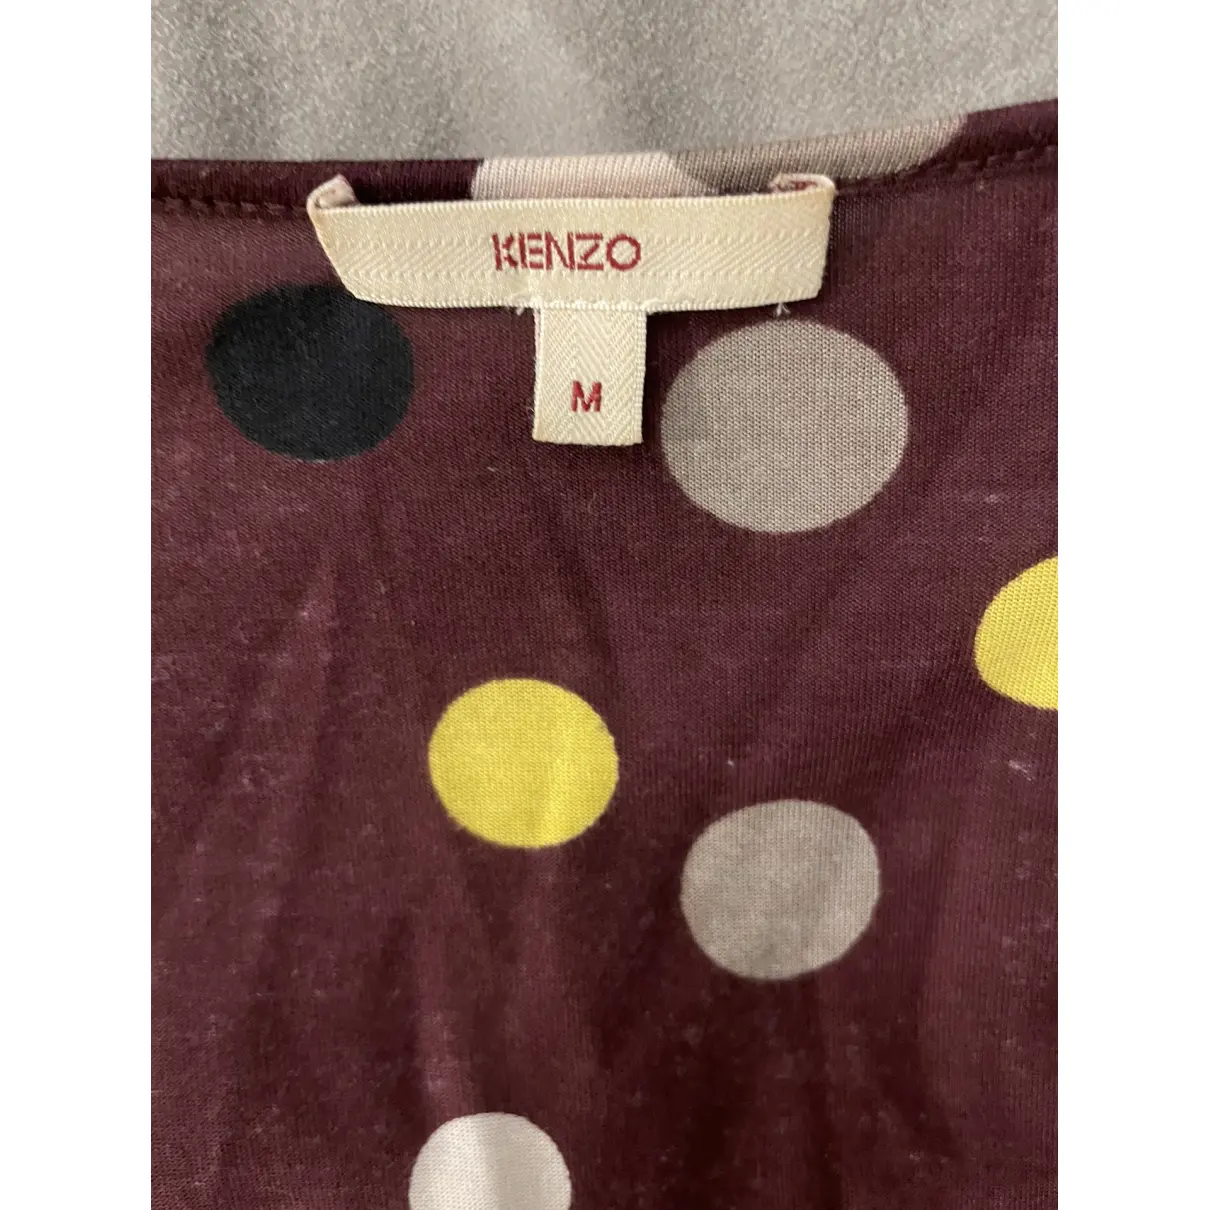 Buy Kenzo Silk mini dress online